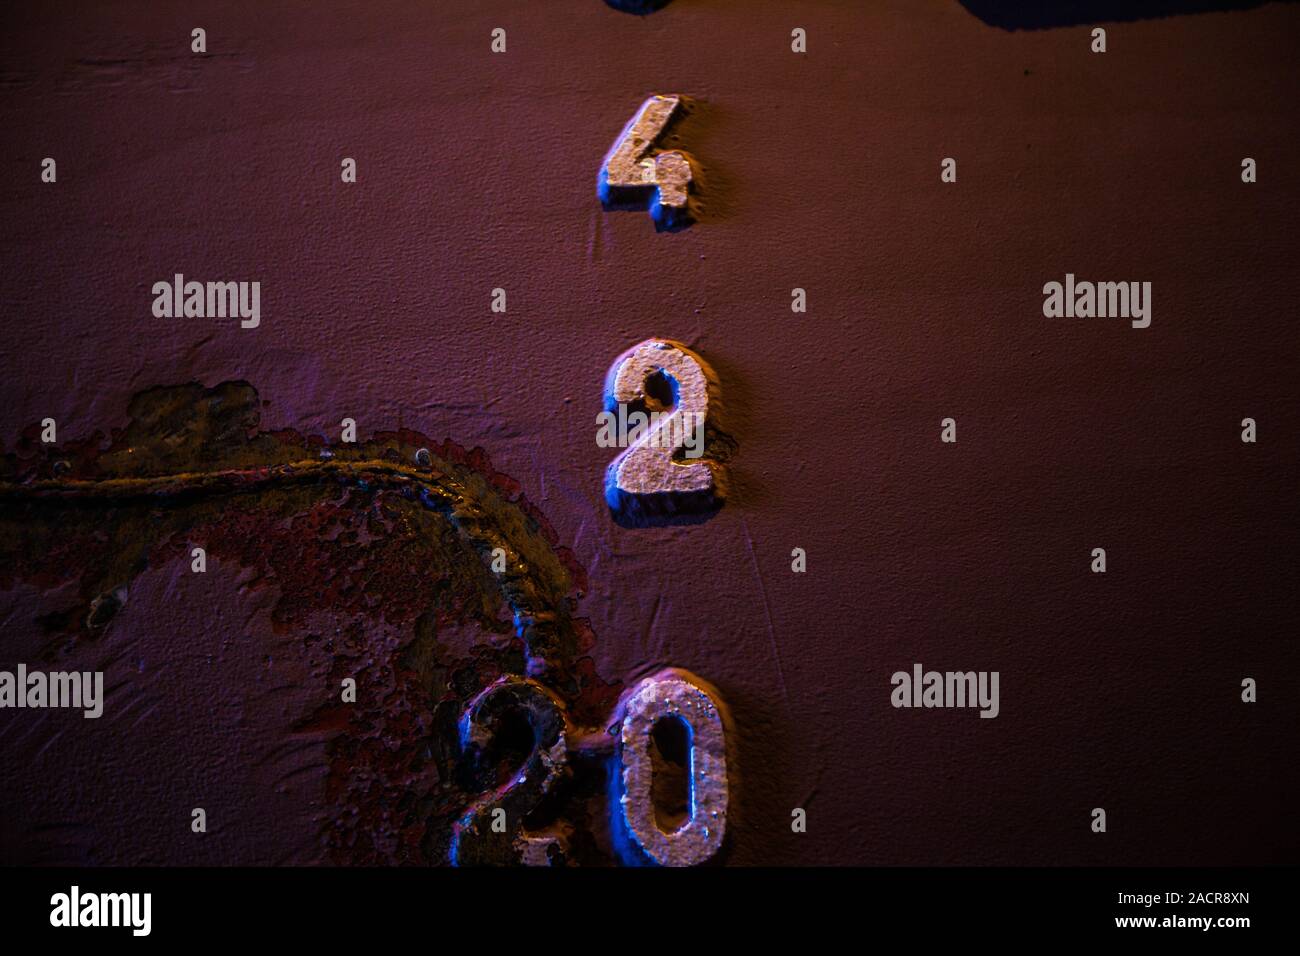 Números laterales fotografías e imágenes de alta resolución - Alamy